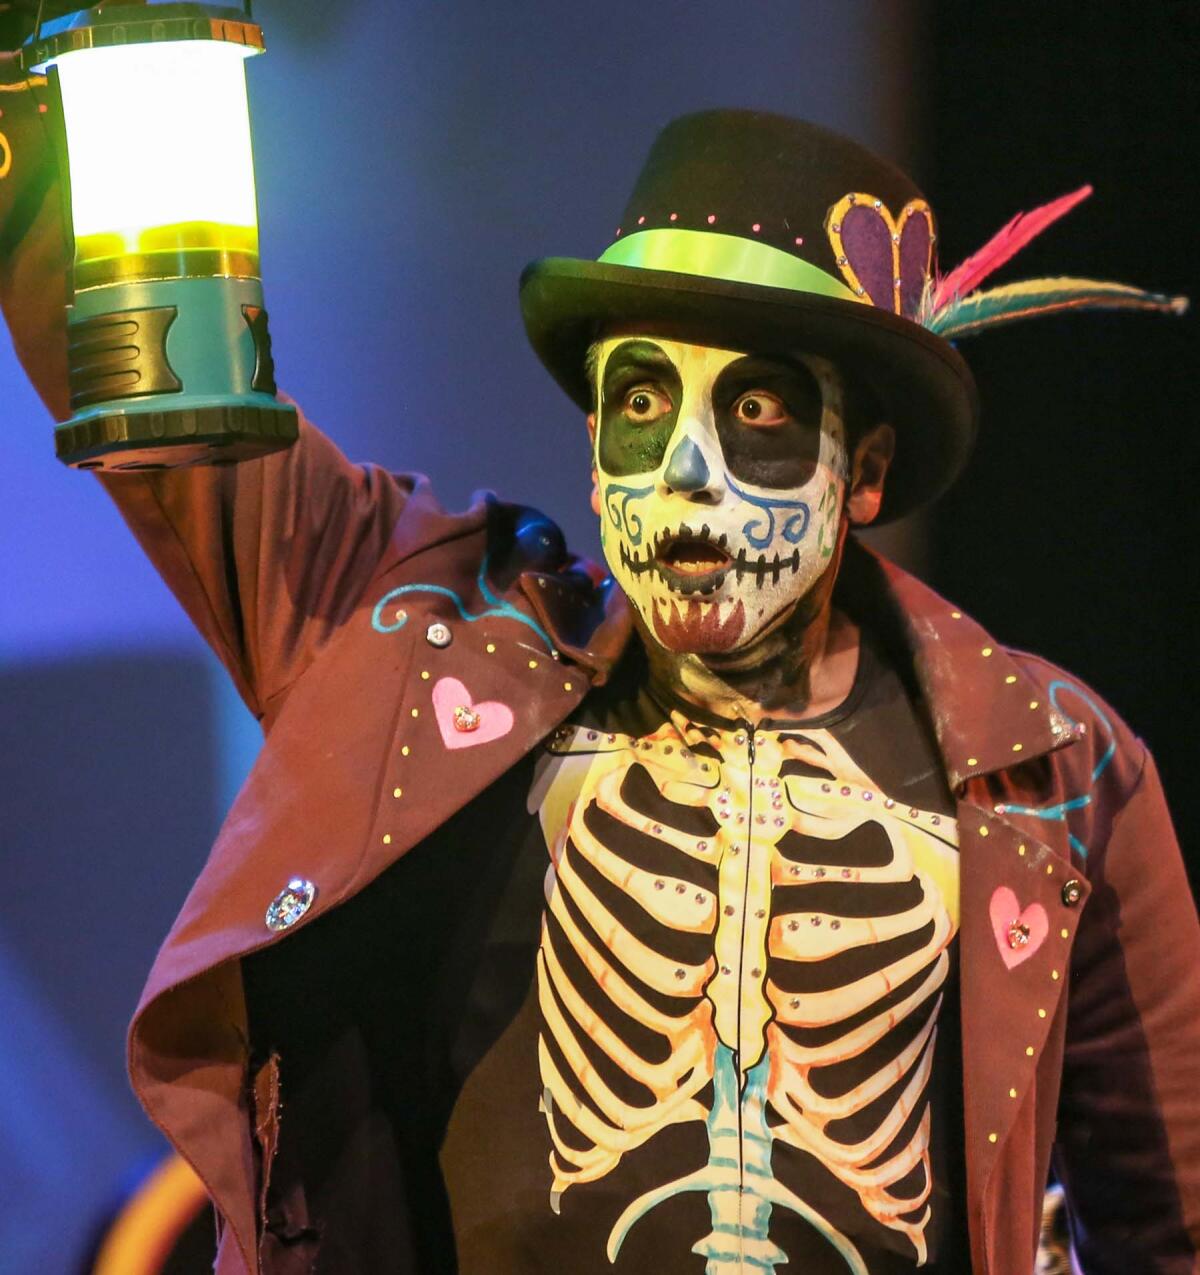 Rafa Reyes portraying the character Sugar Skull.